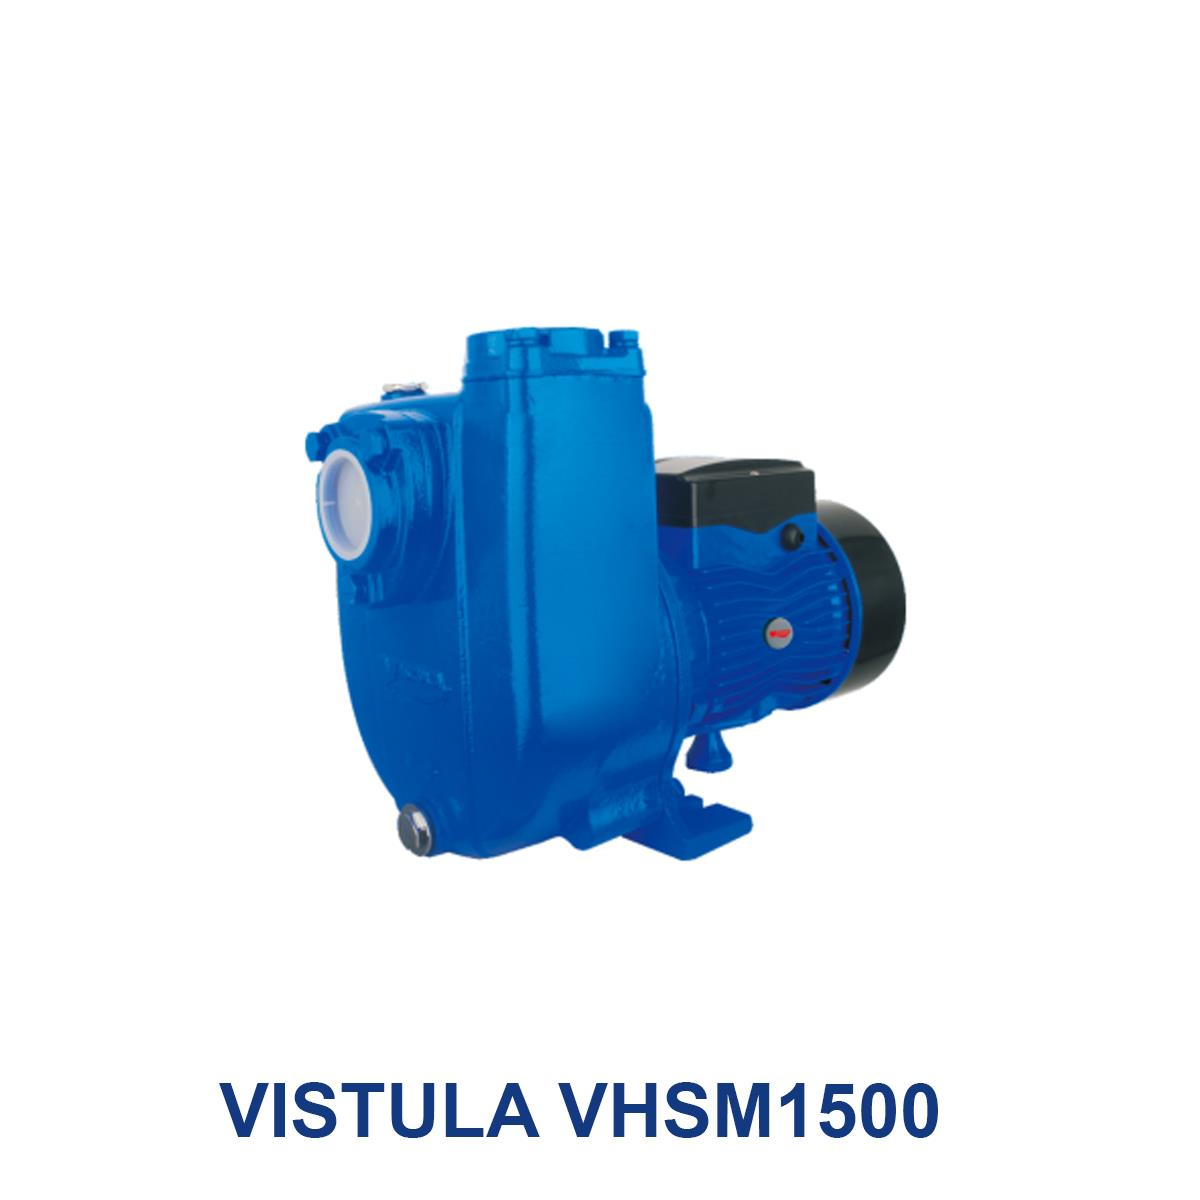 VISTULA-VHSM1500